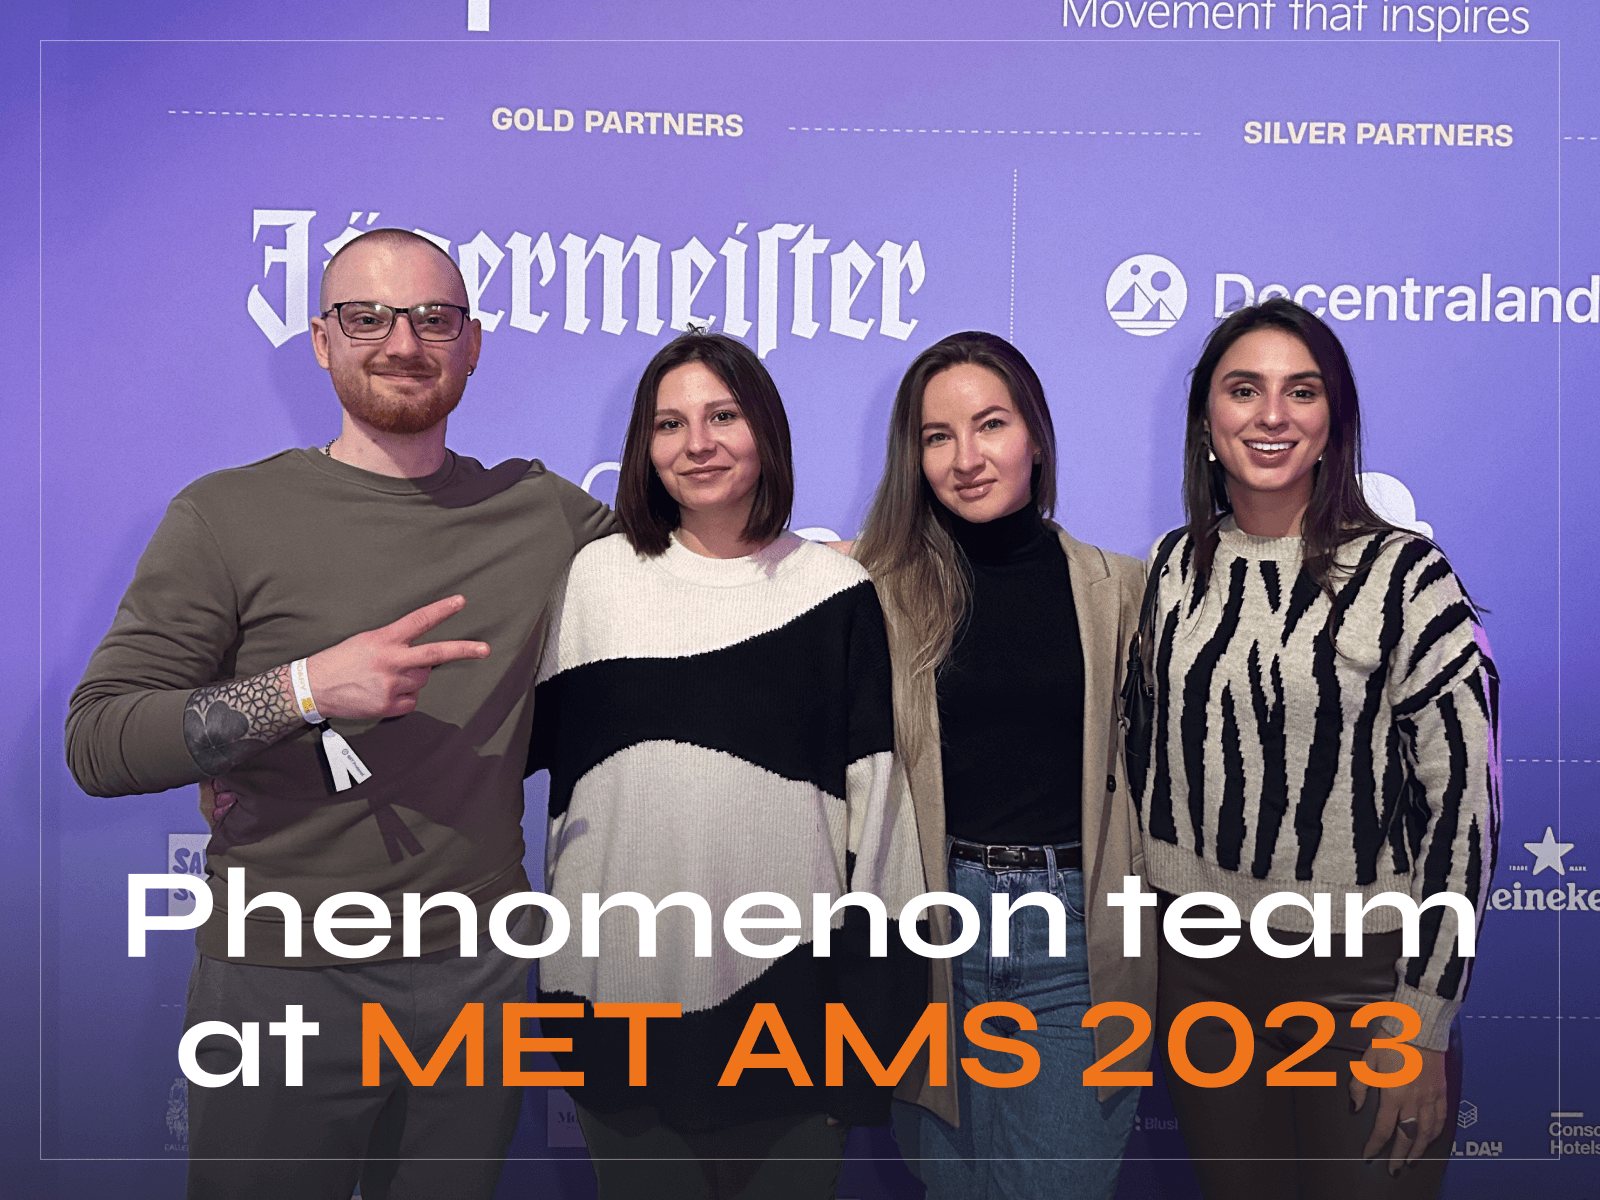 Phenomenon team at MET AMS 2023 - Photo 